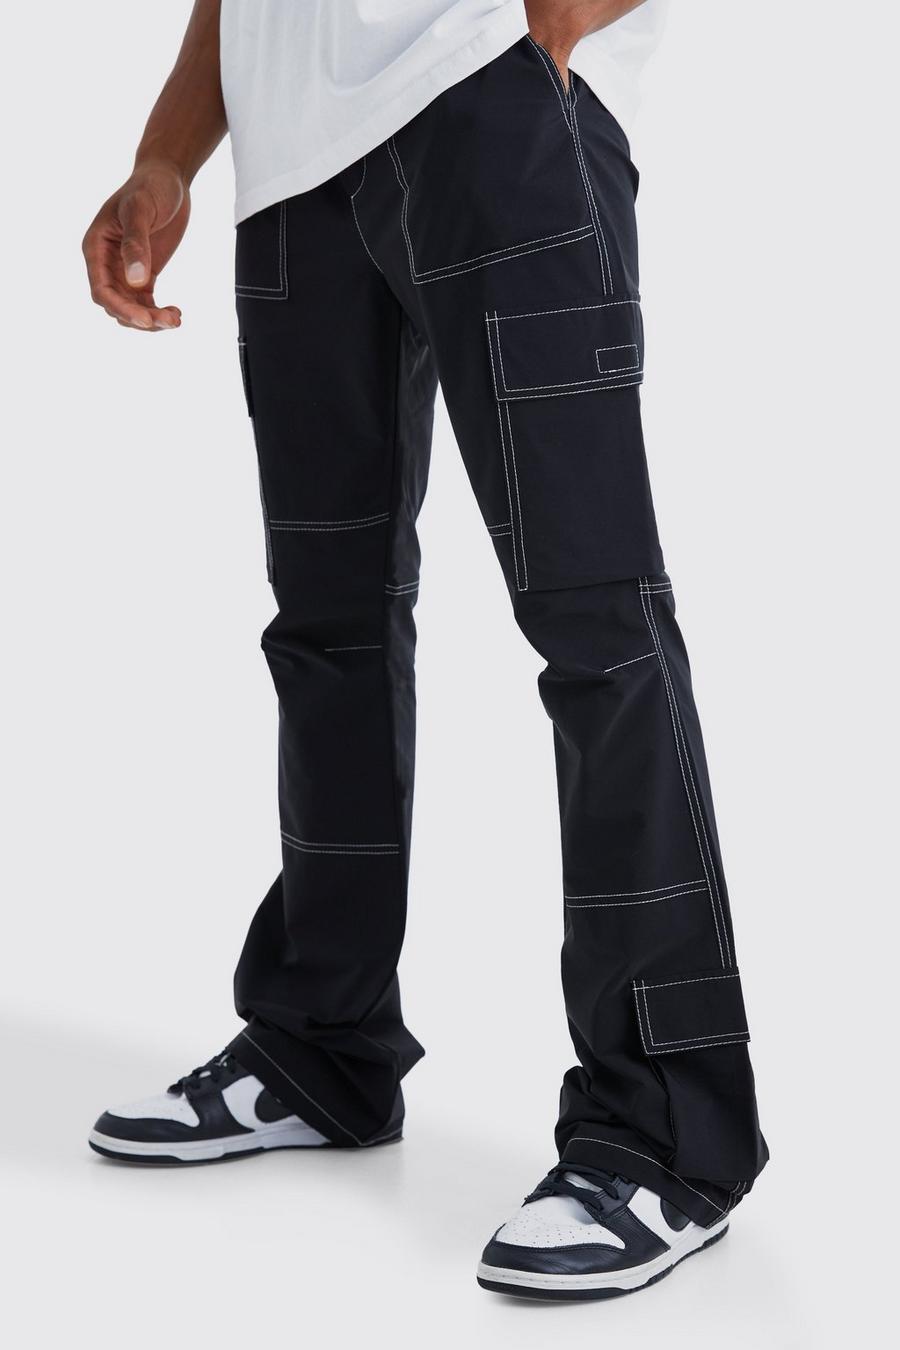 Black Slim Fit Flared Cargo Broek Met Contrasterende Stiksels, Elastische Taille